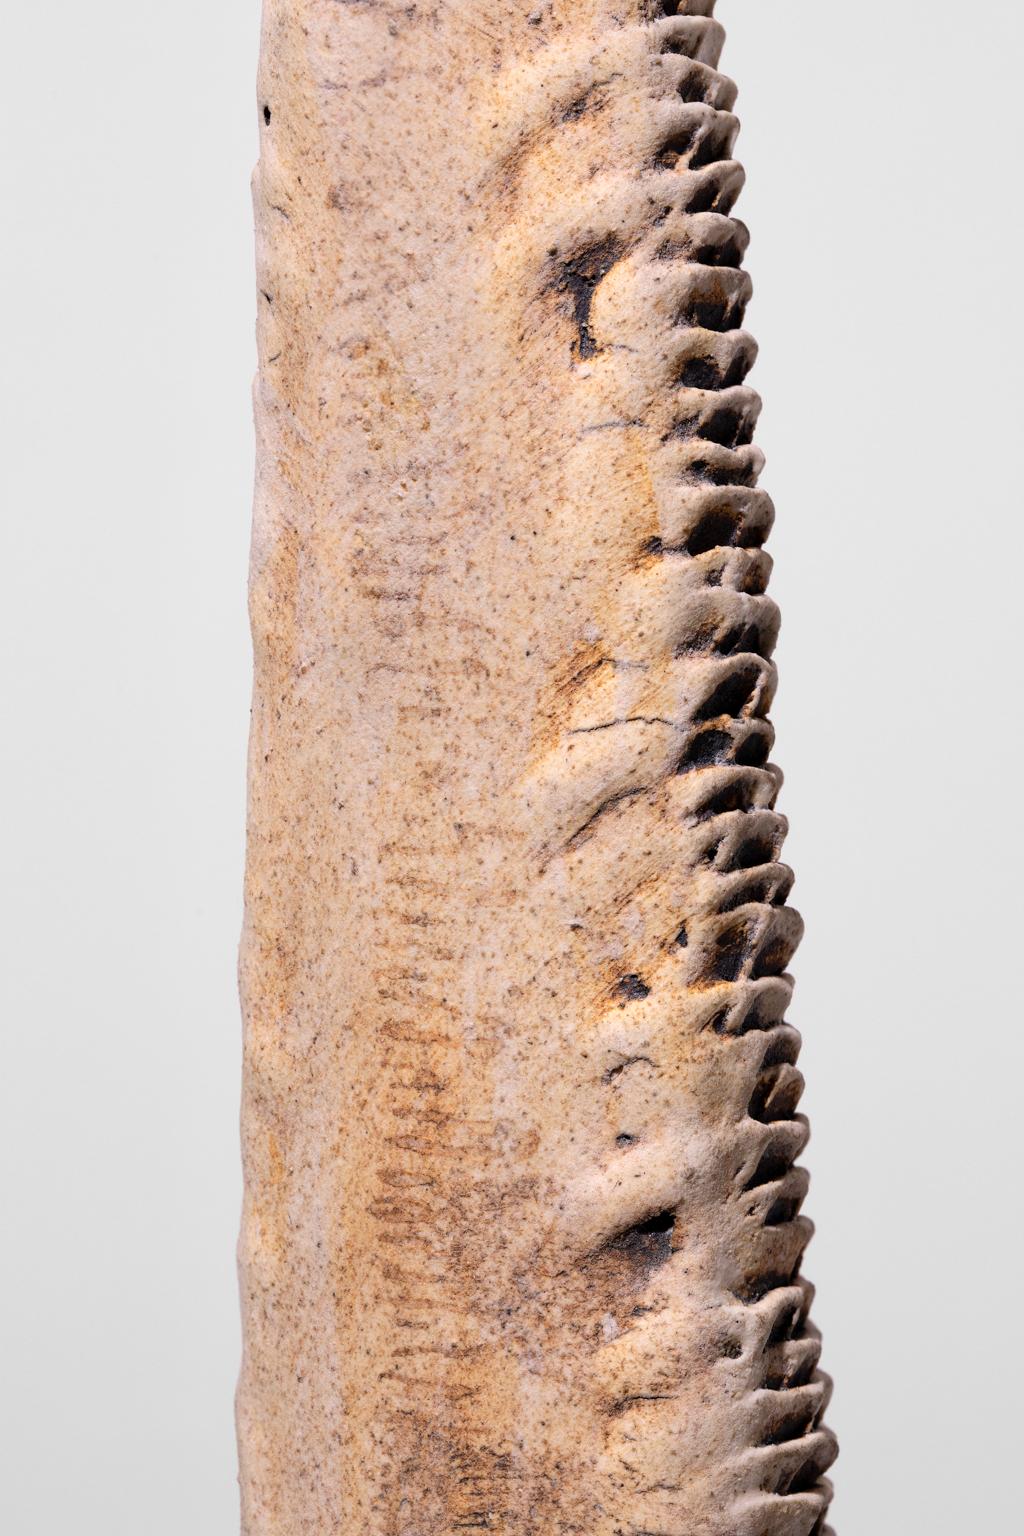 Ceramic Michele Oka Doner Stoneware Figurines Female Torso w/Legs Phallic Shaped Spear